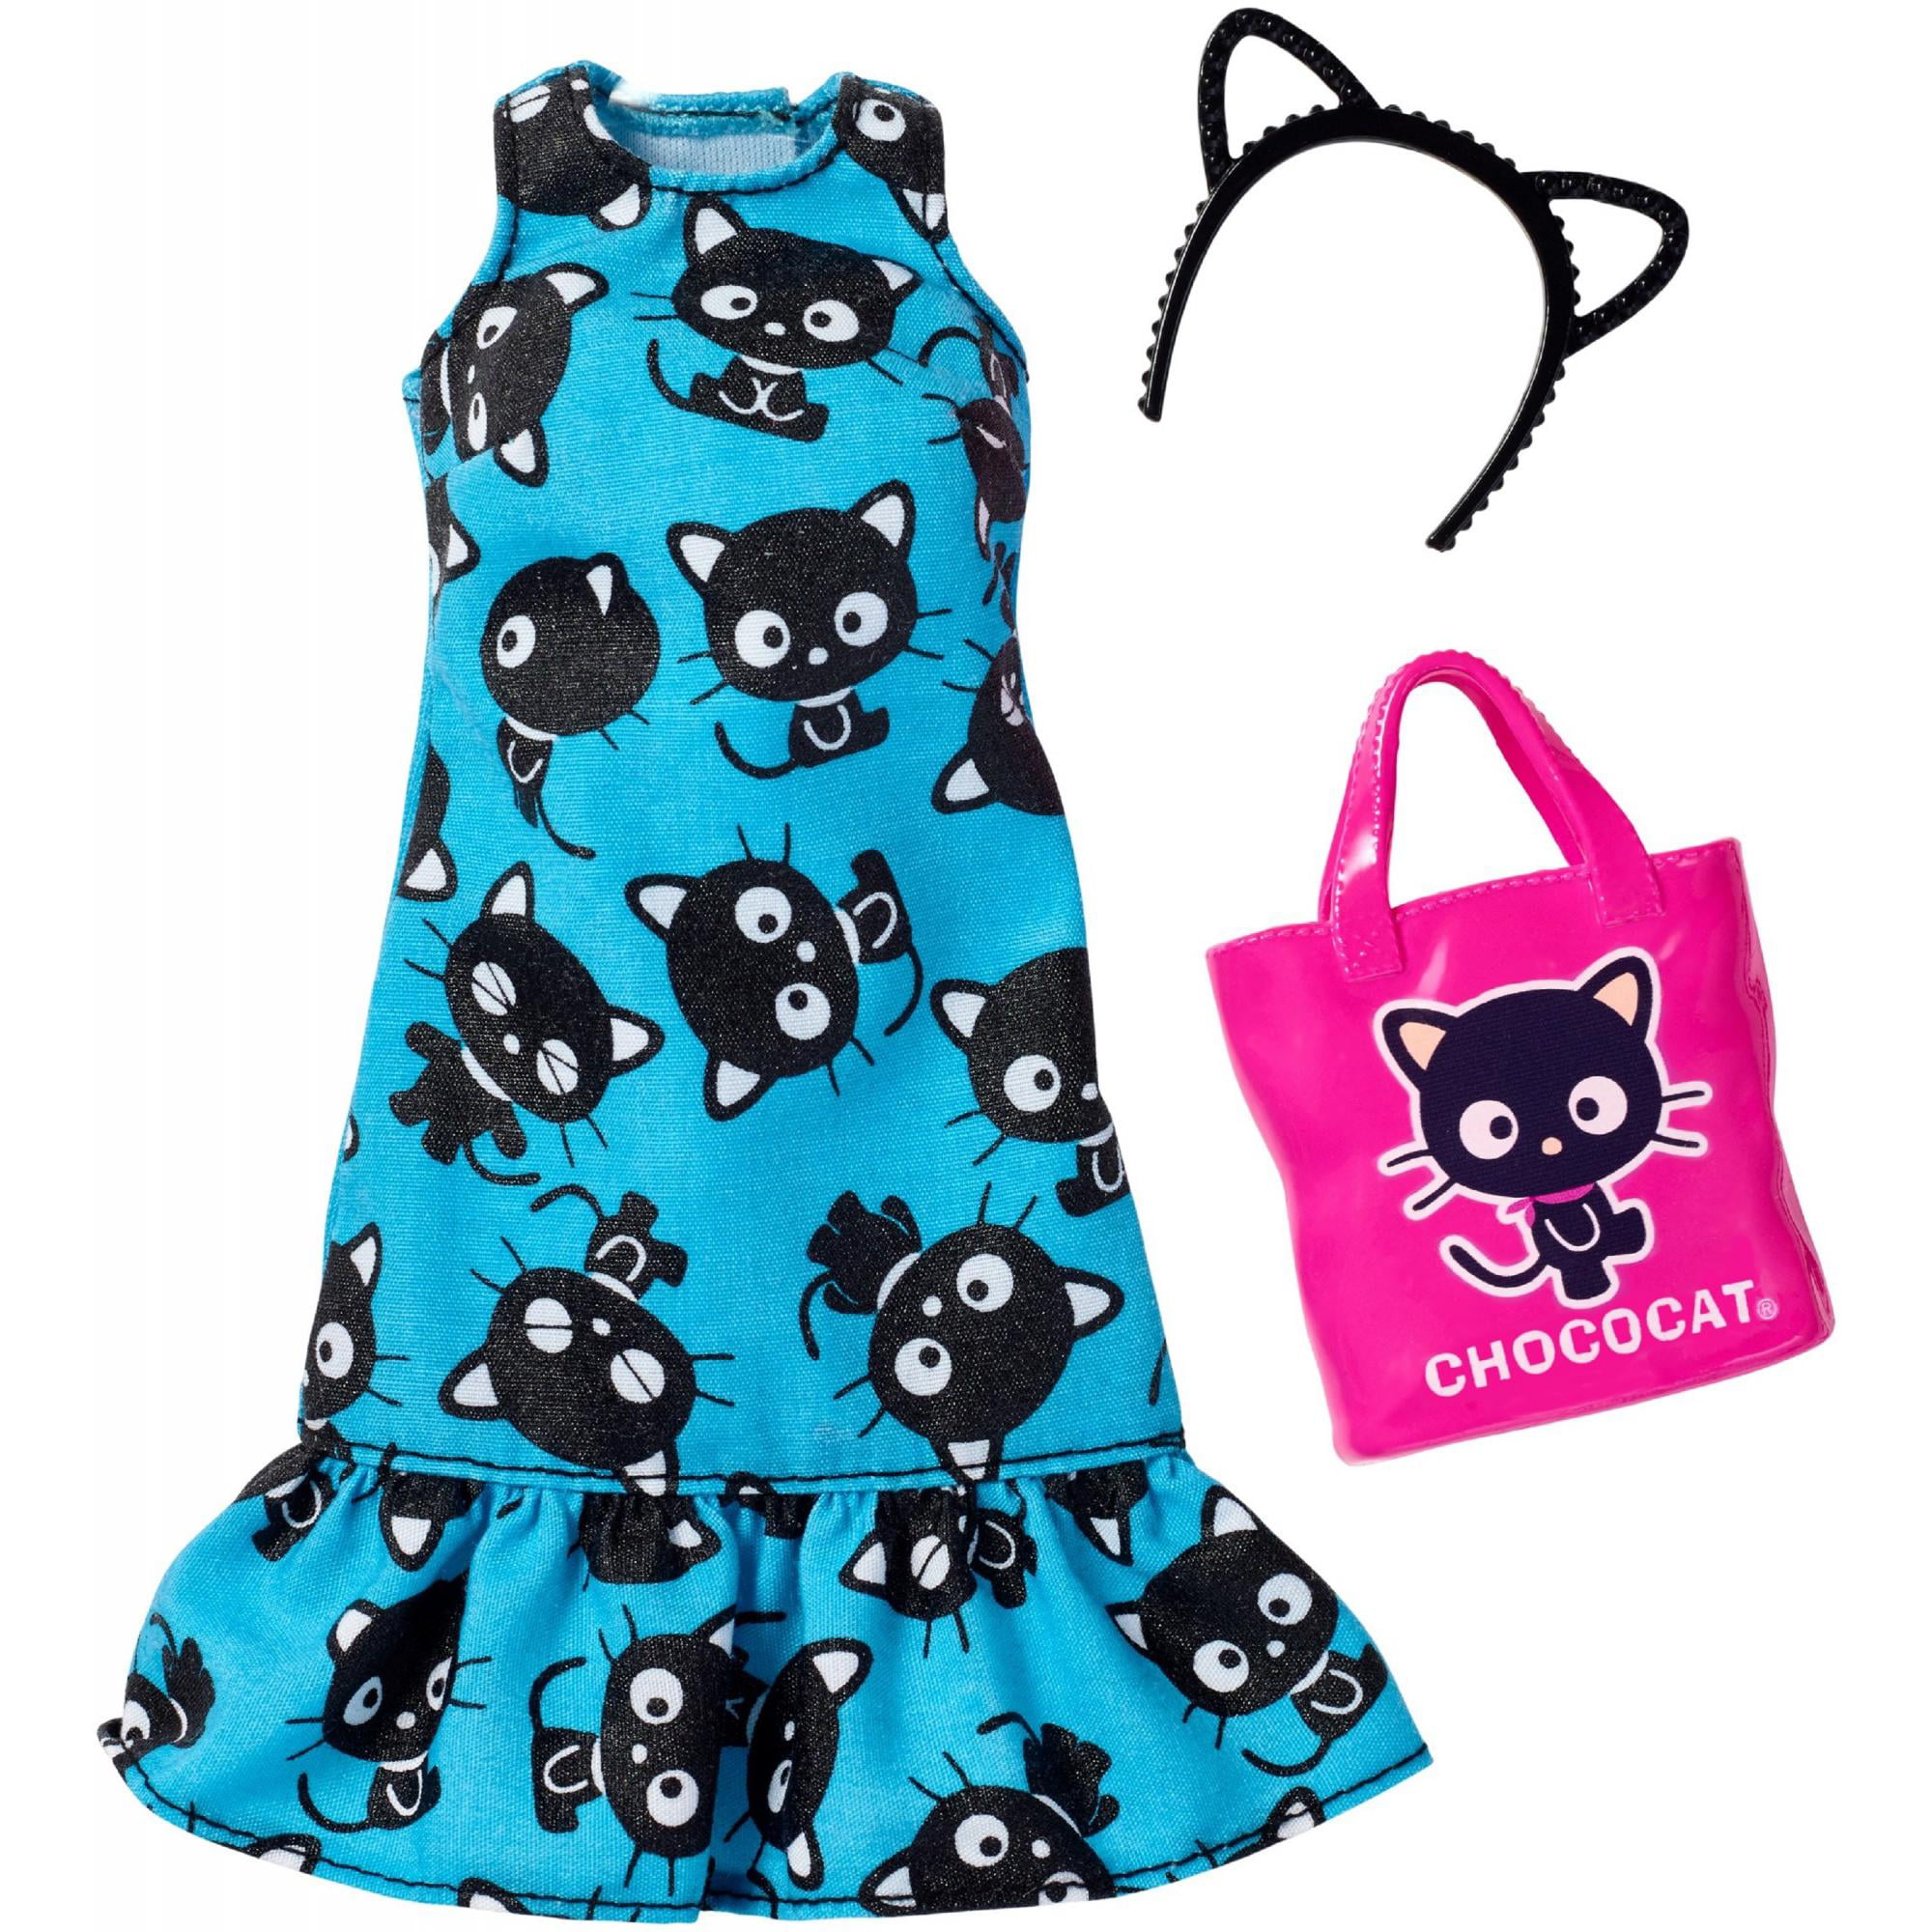 Barbie Hello  Kitty  Blue Cat Dress Walmart com Walmart com